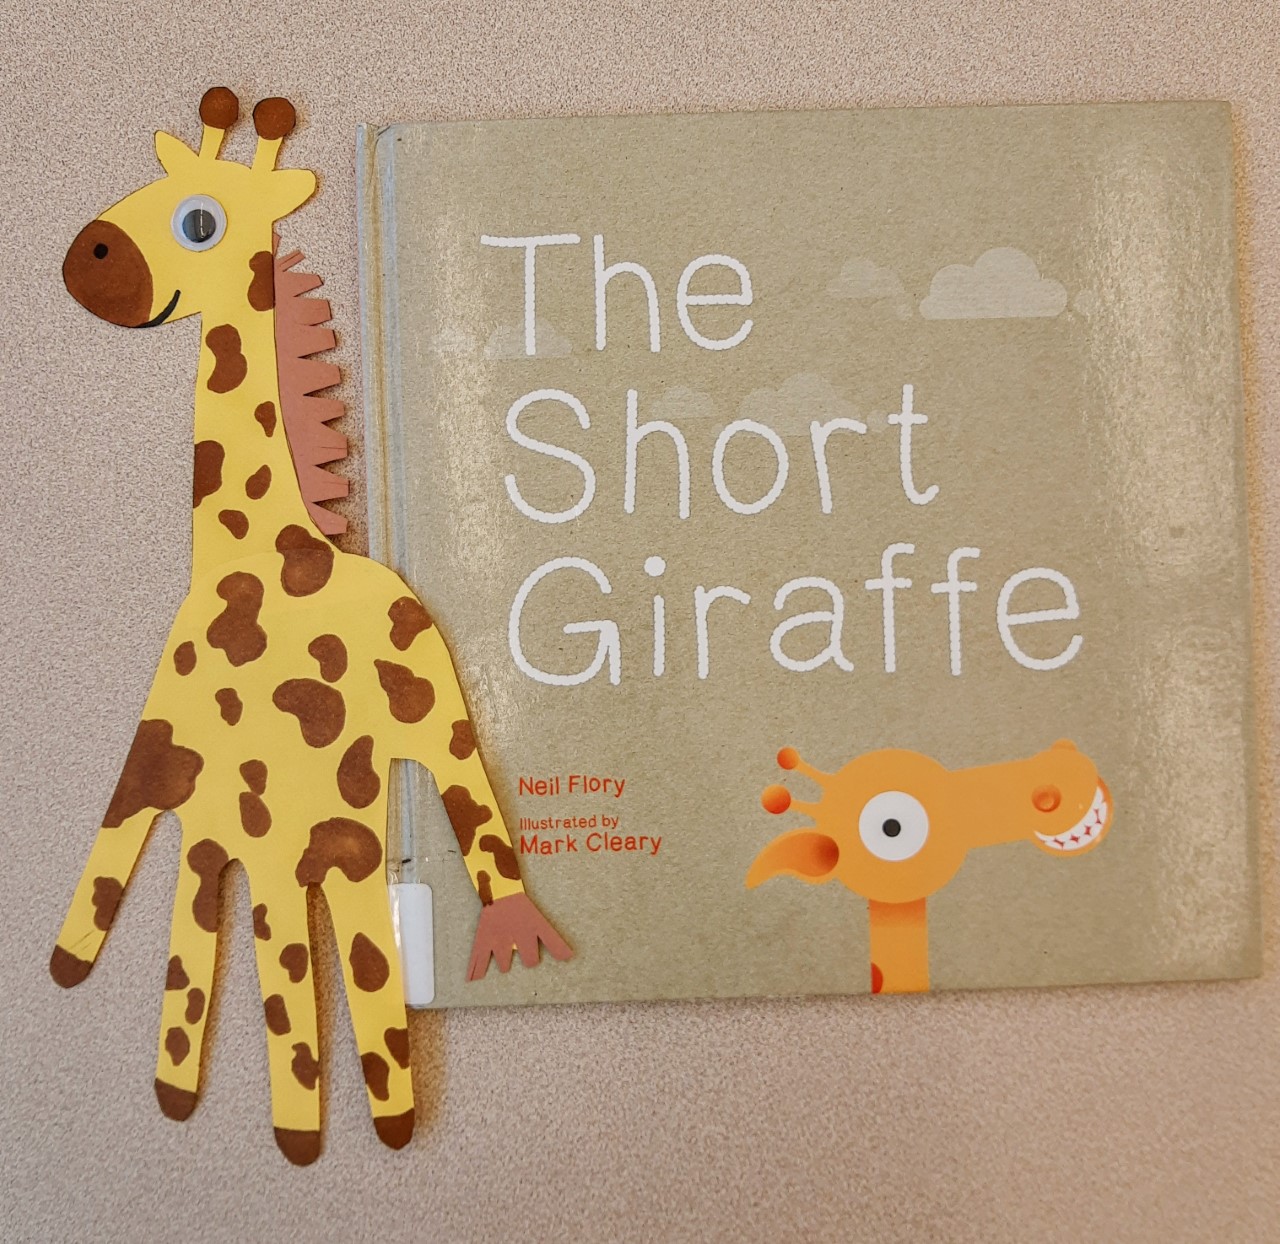 Giraffe craft and book